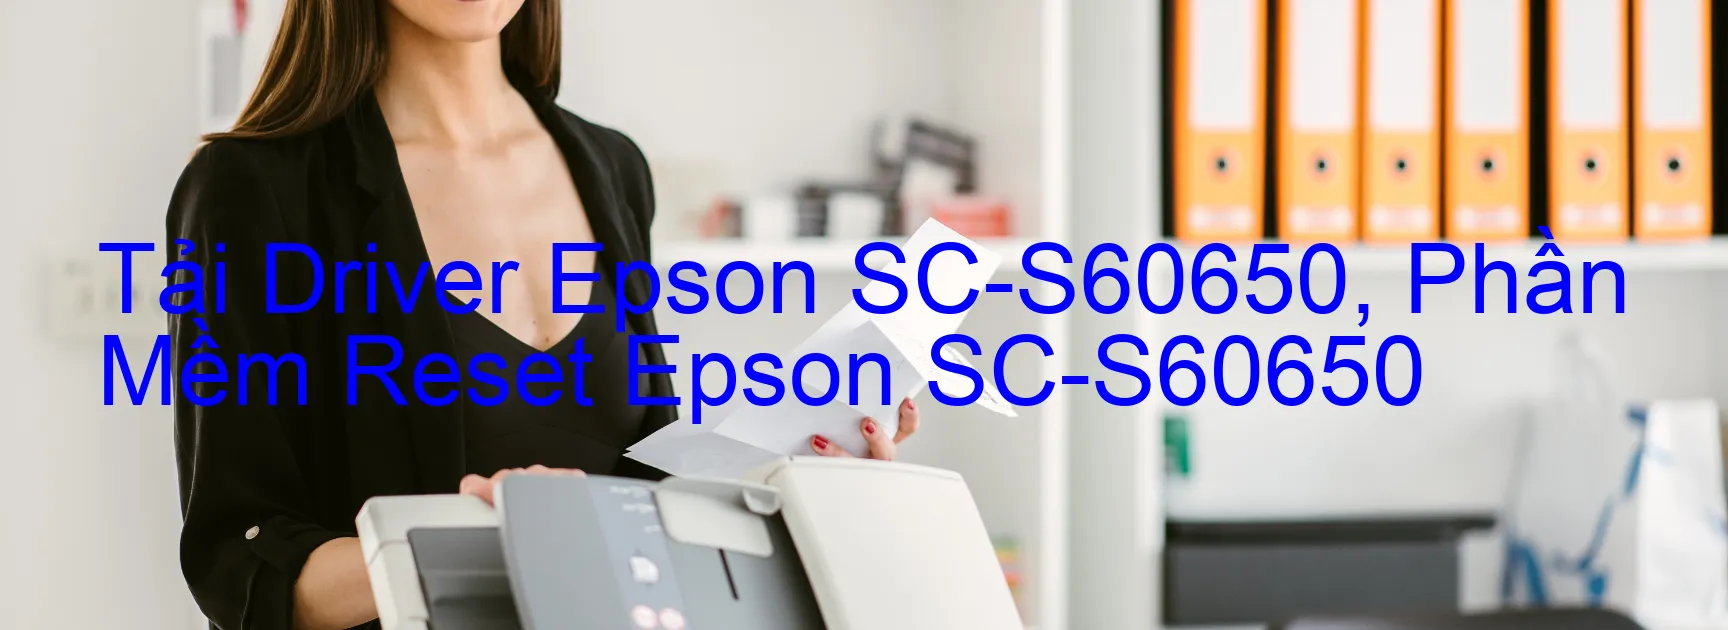 Driver Epson SC-S60650, Phần Mềm Reset Epson SC-S60650